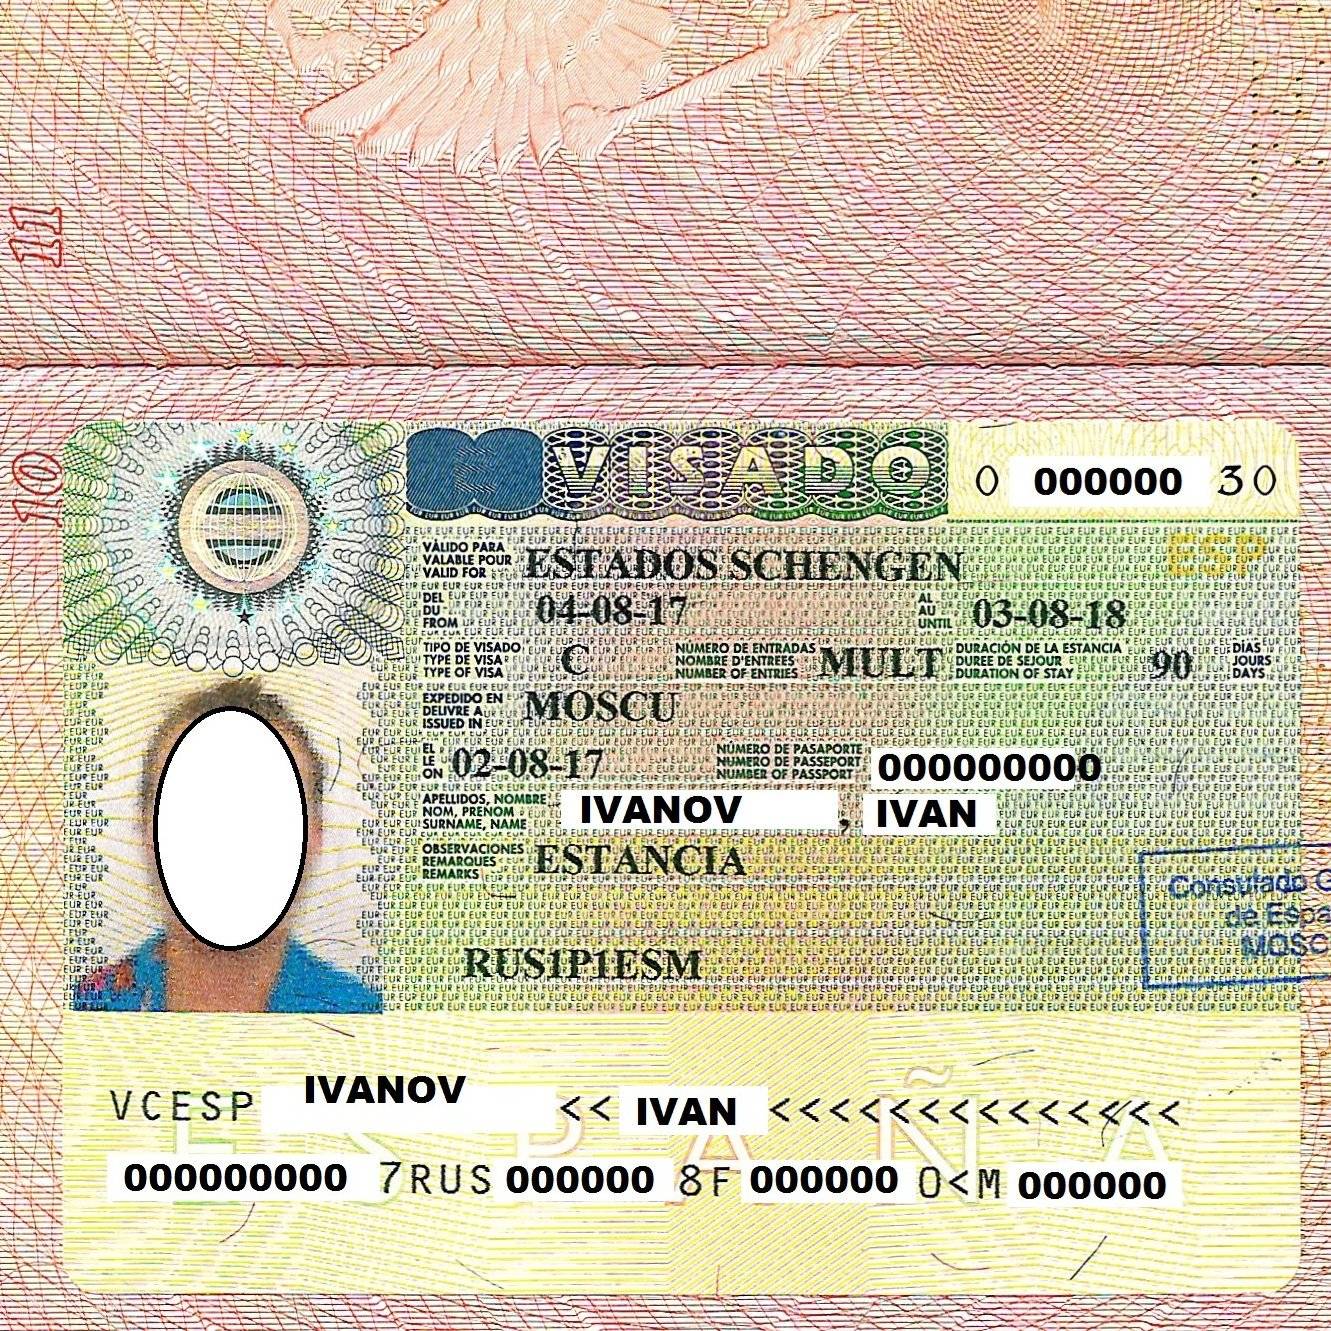 Visa type. Испанская виза. Виза в Испанию. Испанская виза д. Испанская виза шенген.